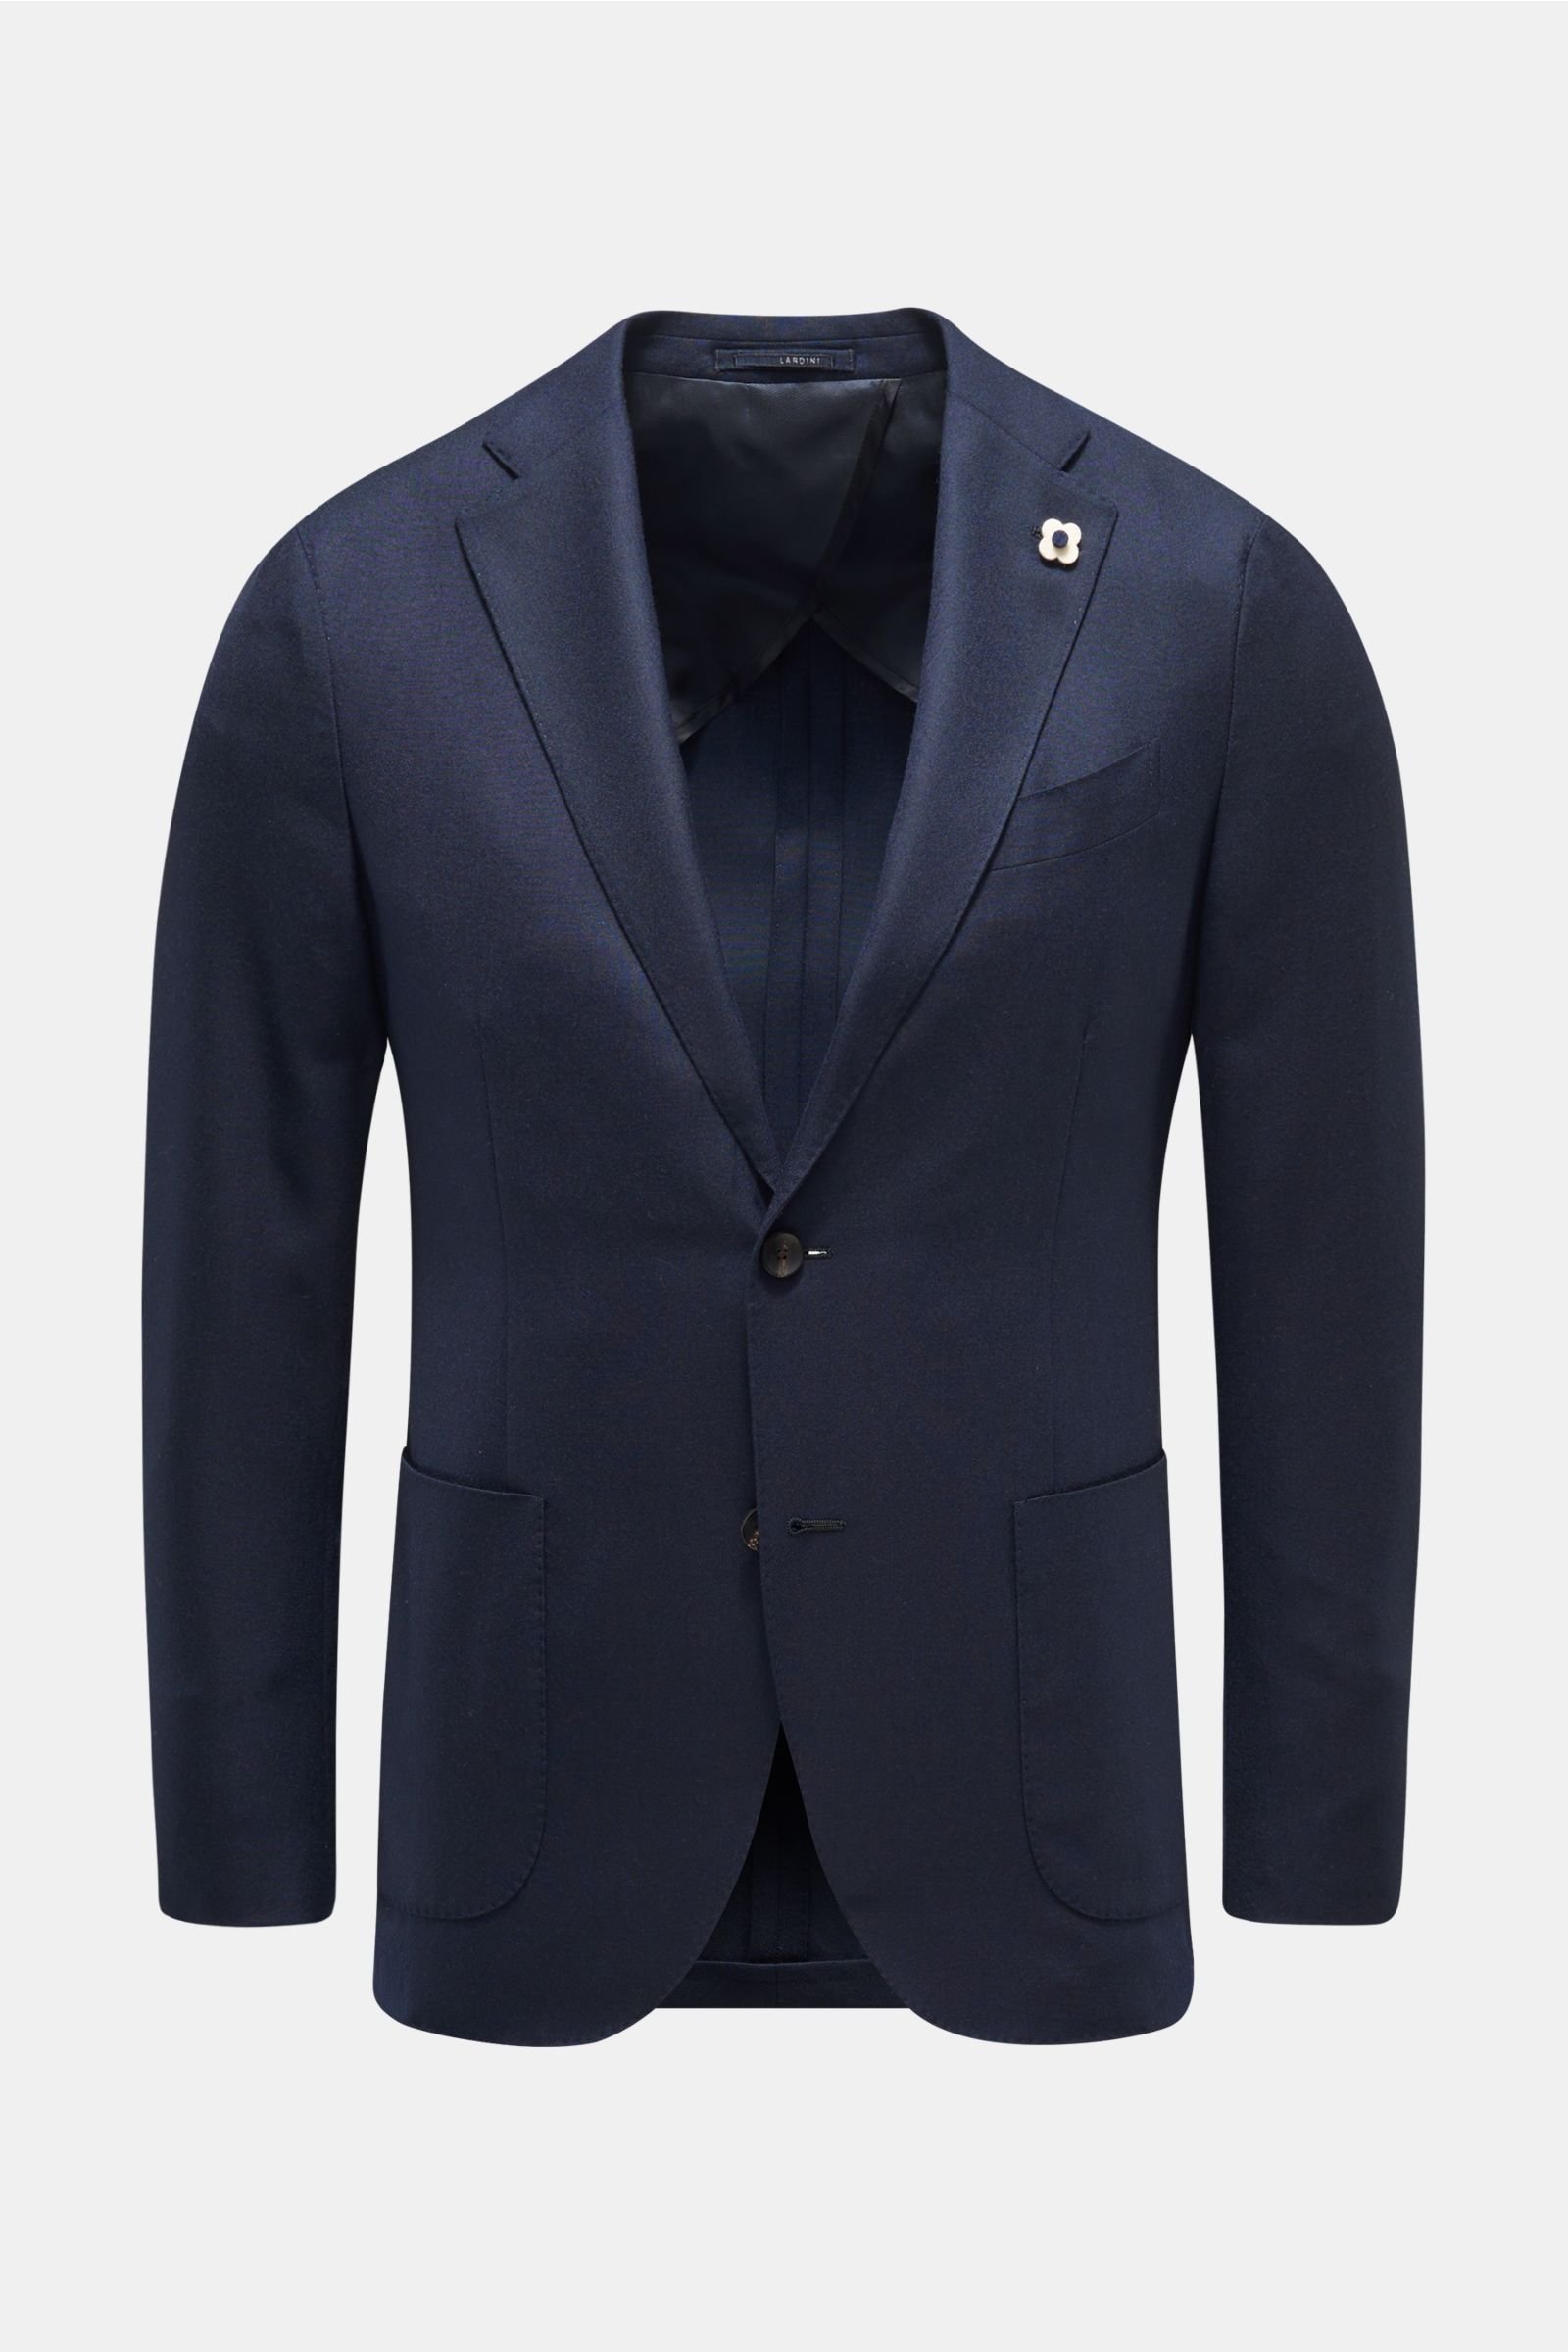 LARDINI cashmere smart-casual jacket navy | BRAUN Hamburg